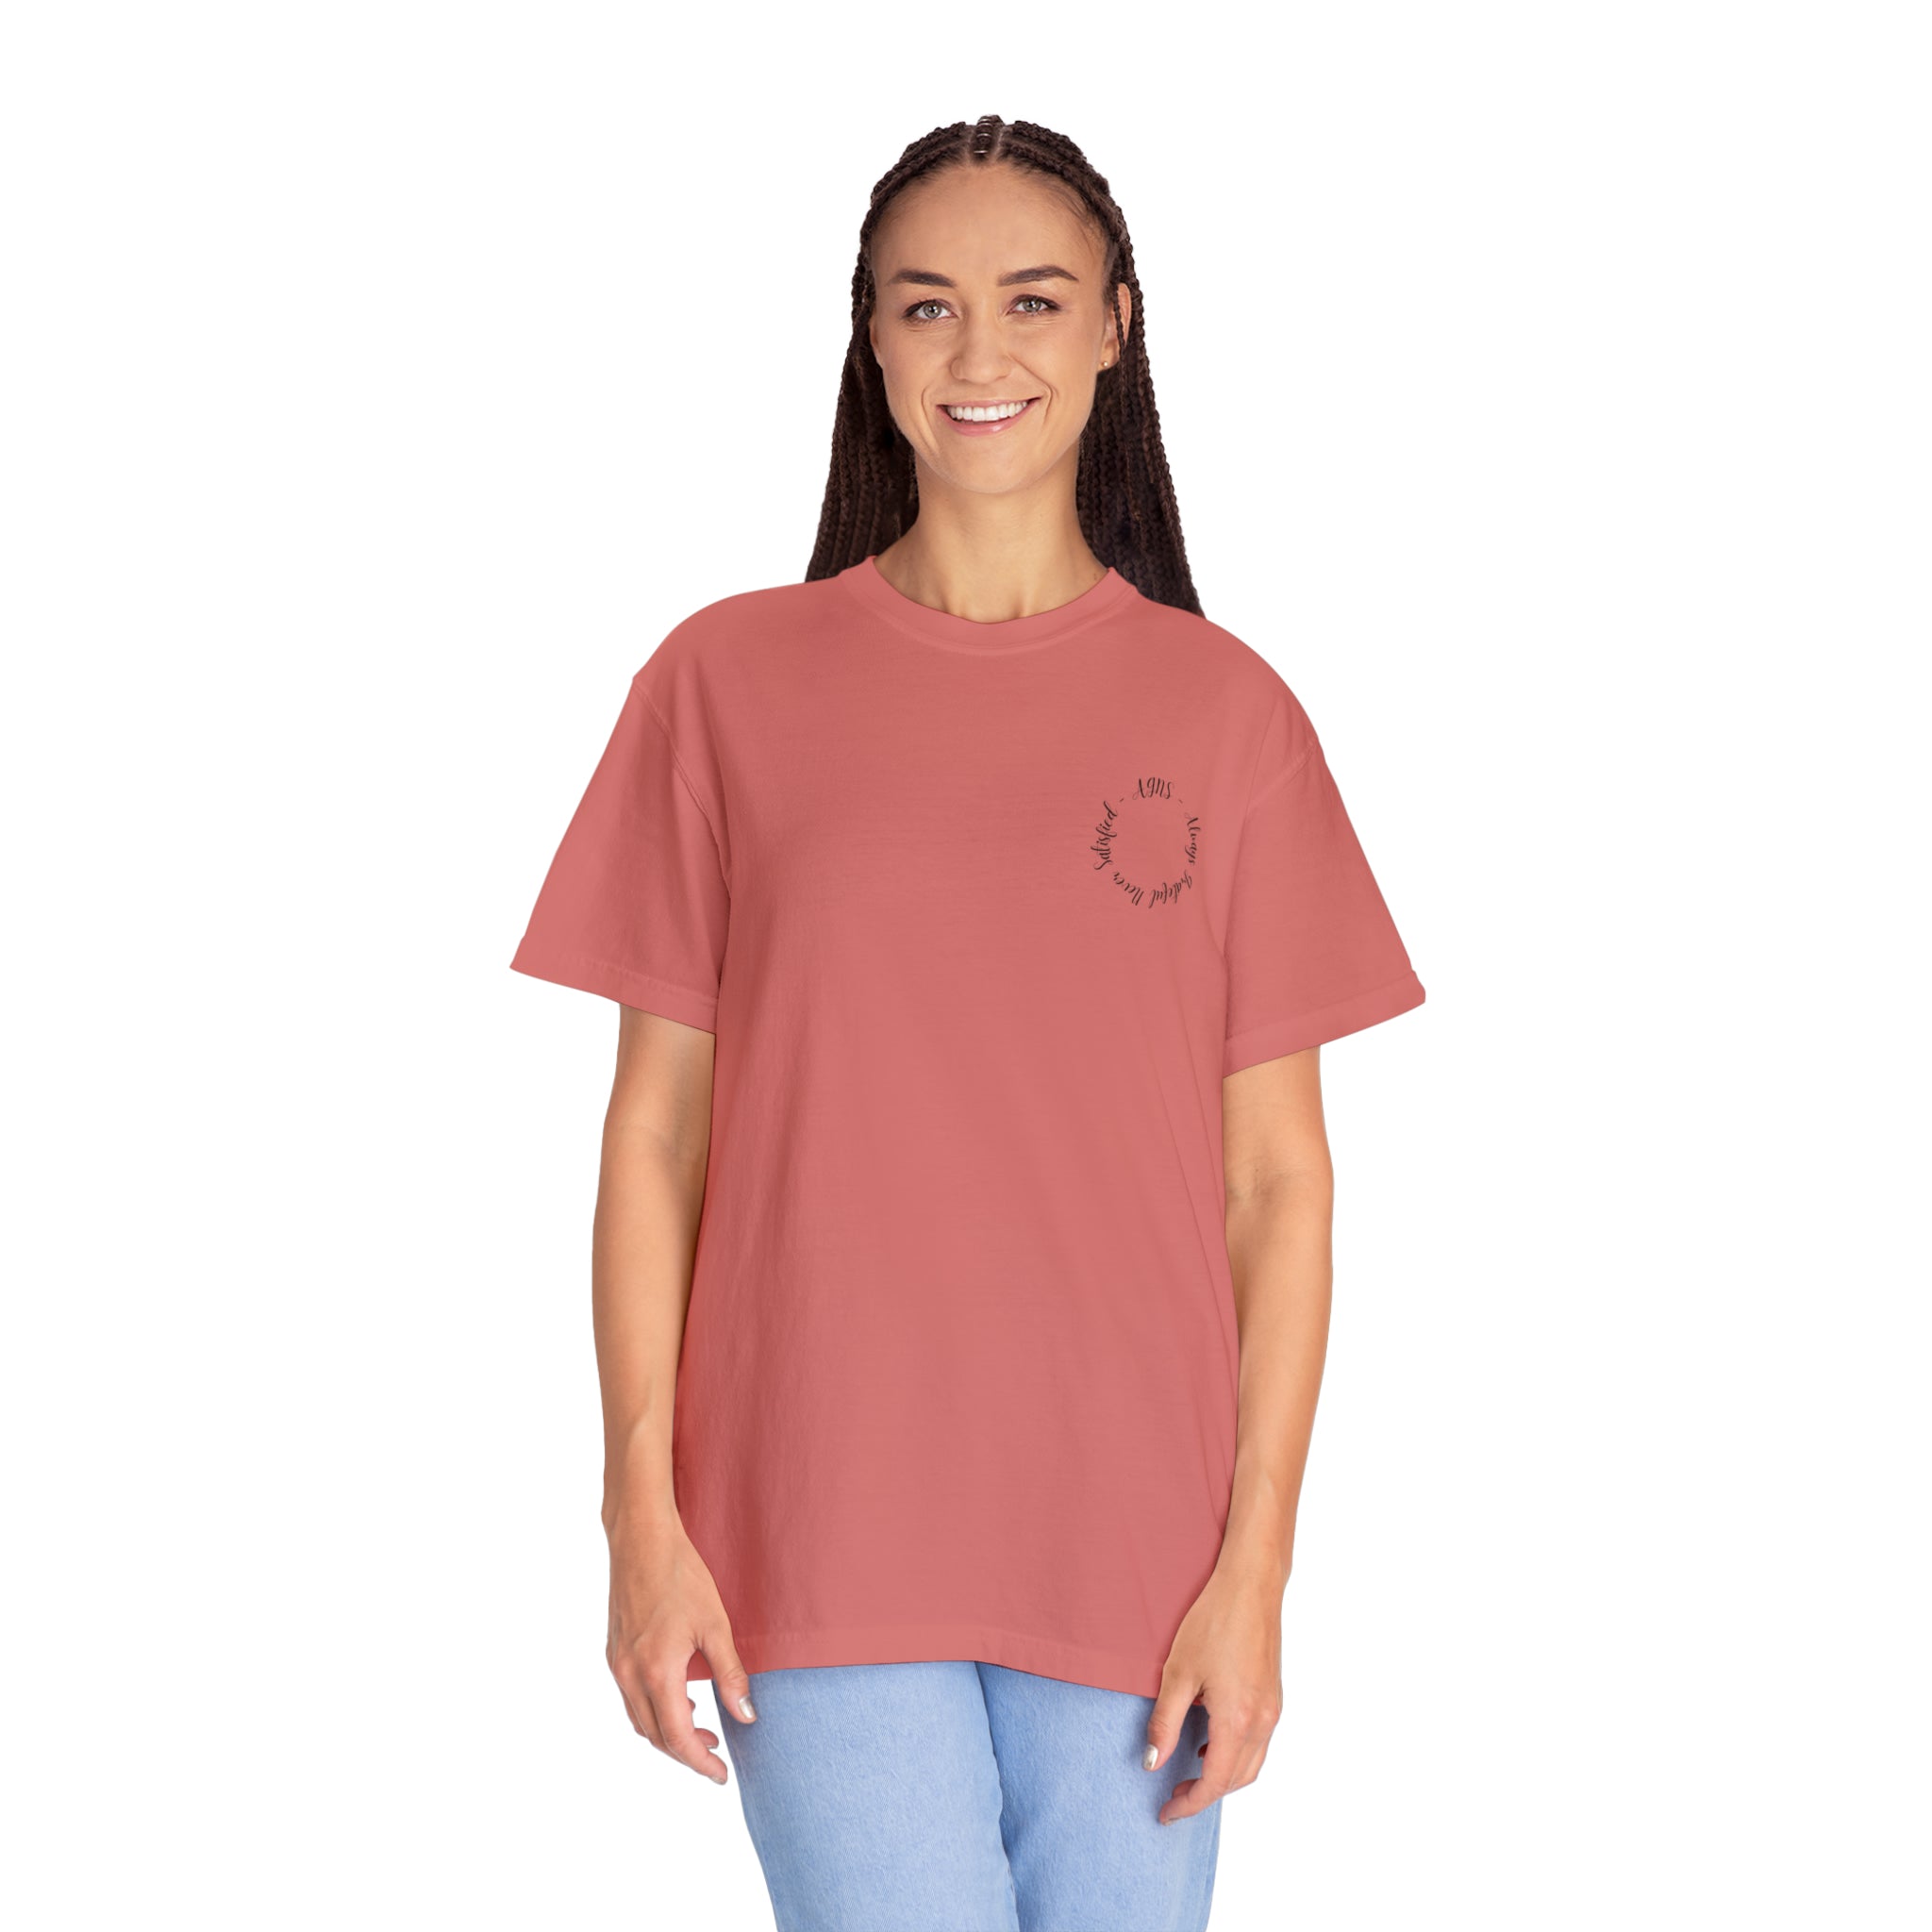 Circle Logo - Unisex Garment-Dyed T-shirt